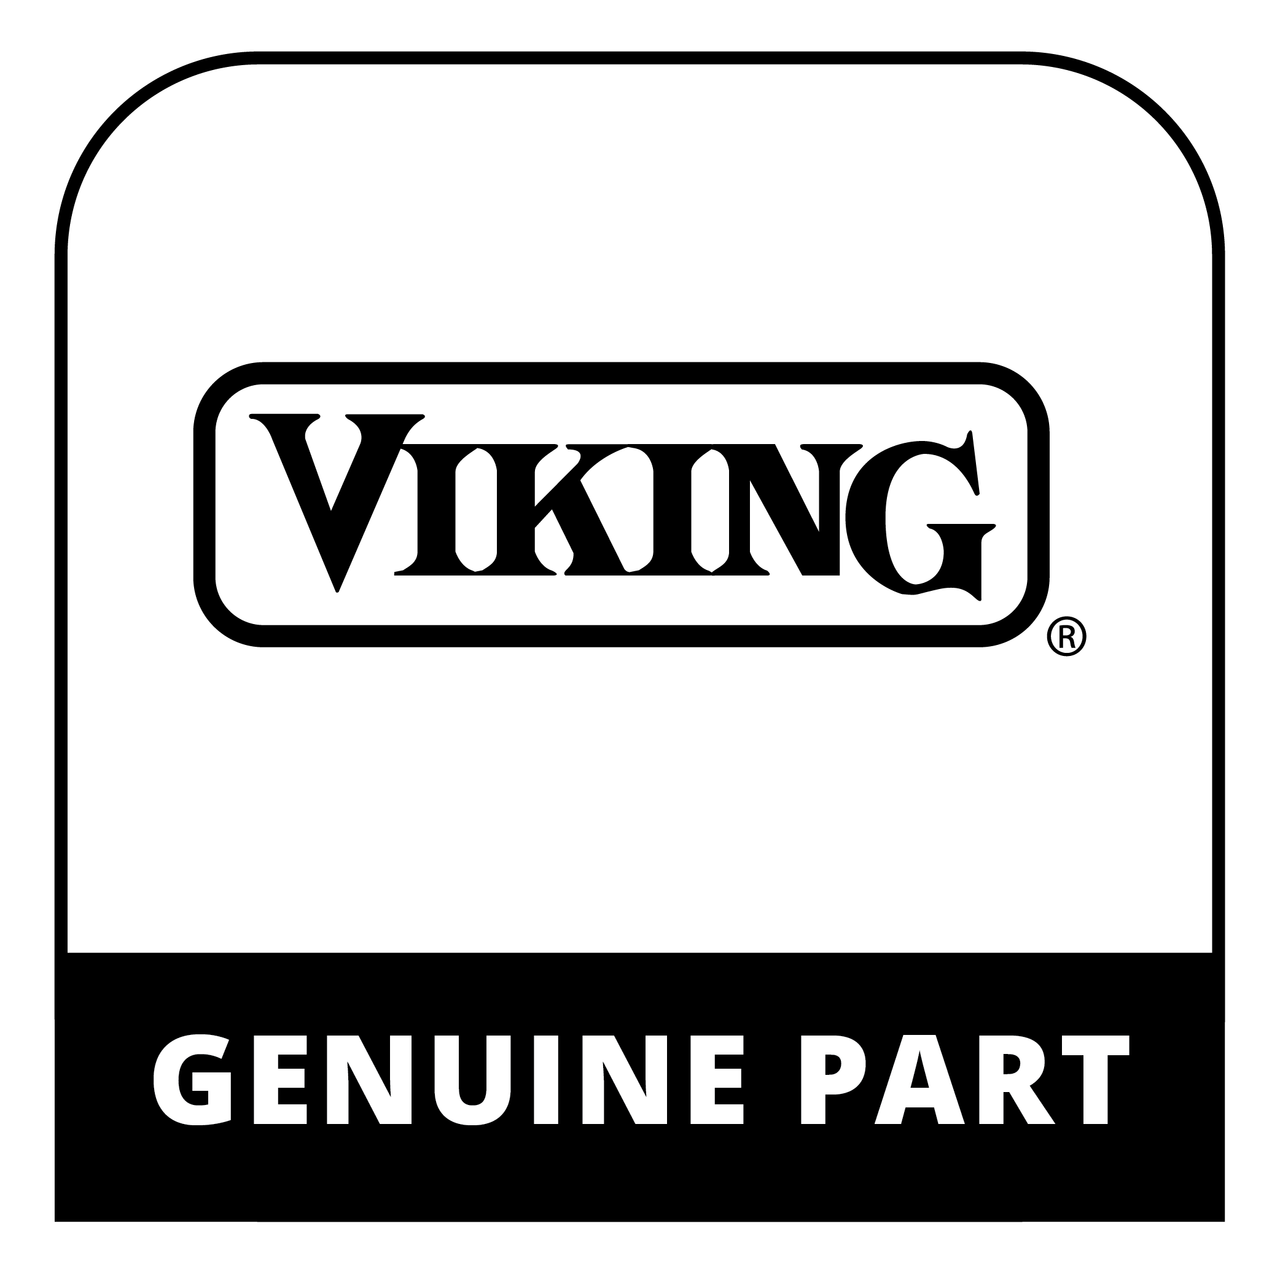 Viking 075720-000 - Latch Holder Assy Right - Genuine Viking Part